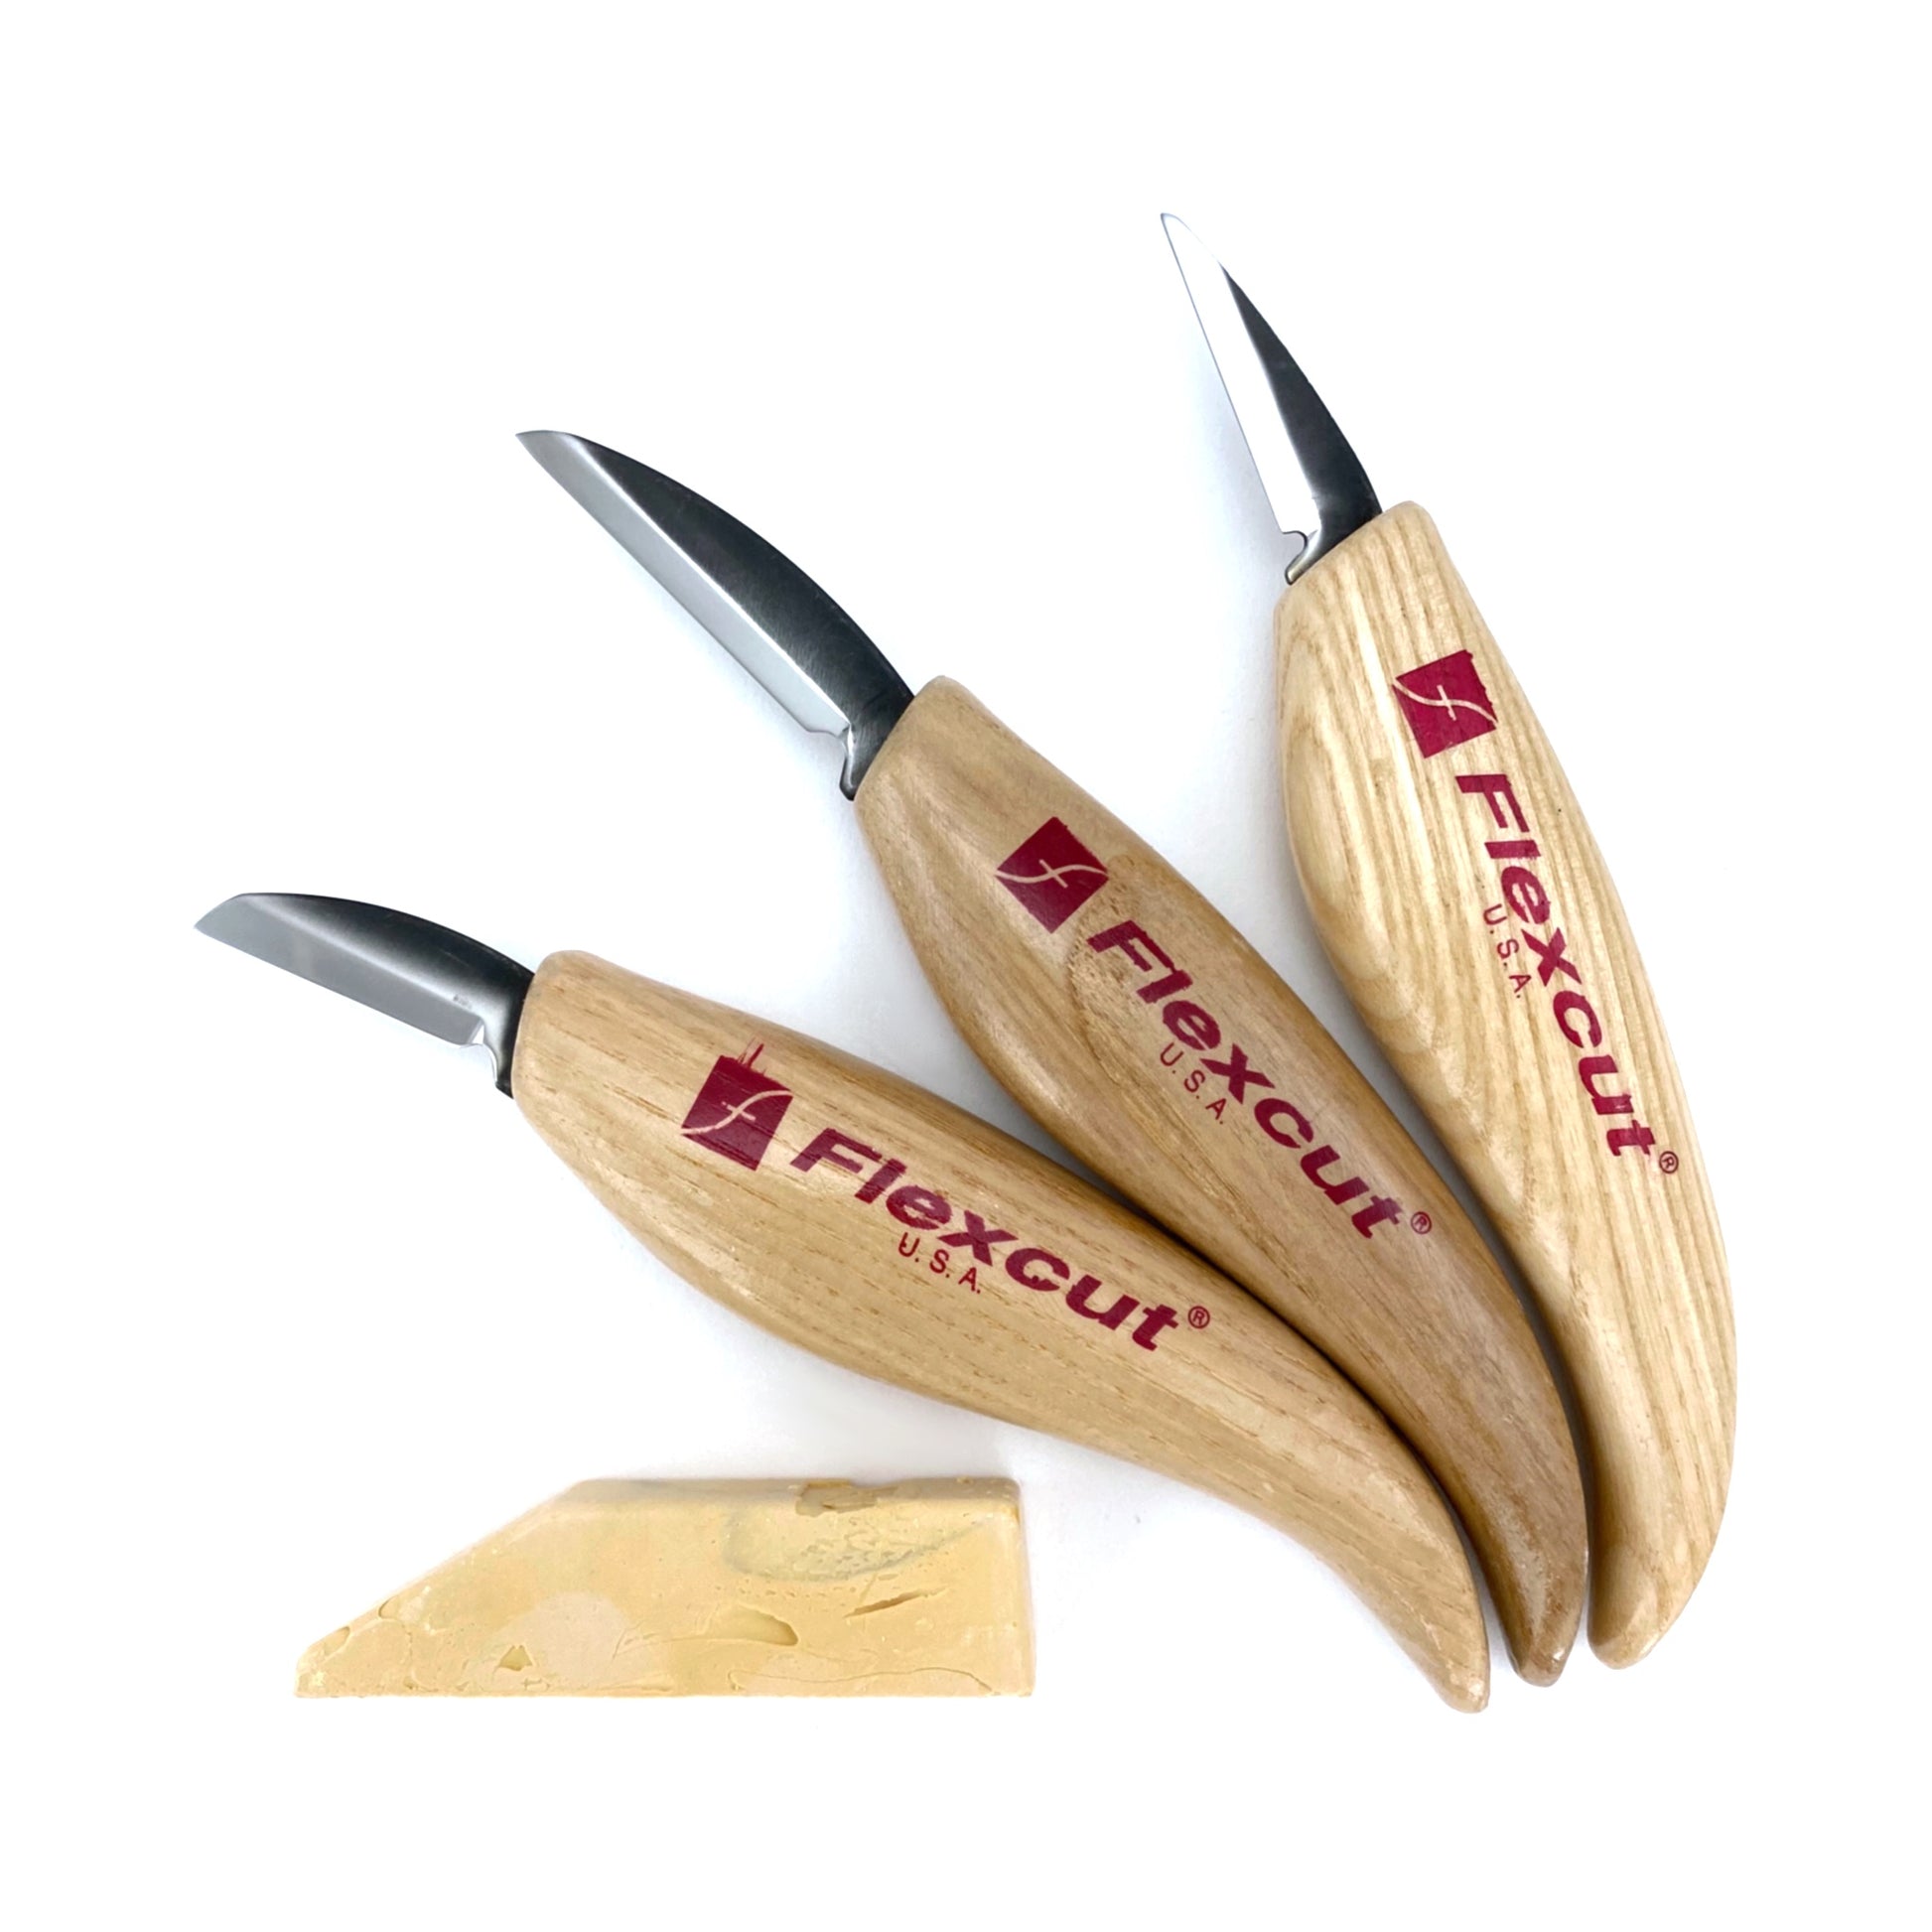 Flexcut Carving Knife Sets